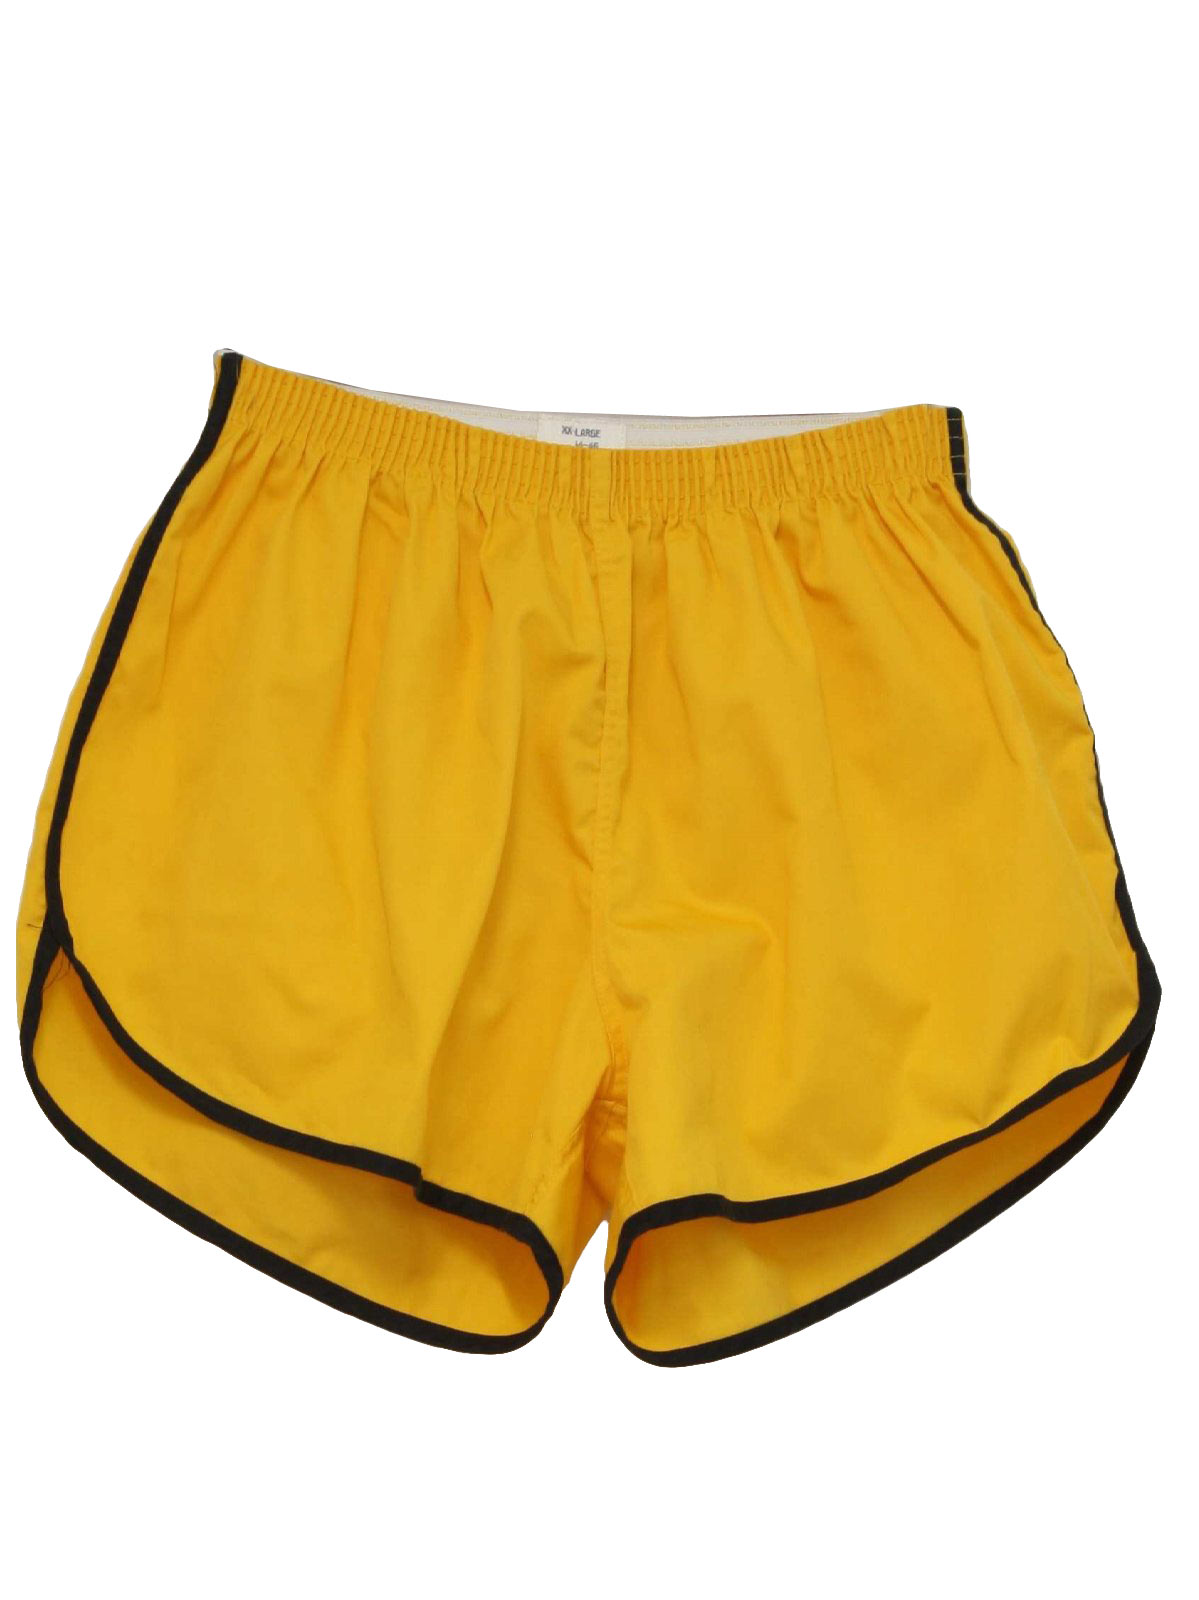 Eighties Vintage Shorts: 80s -Merrygarden- Mens yellow and black seam ...